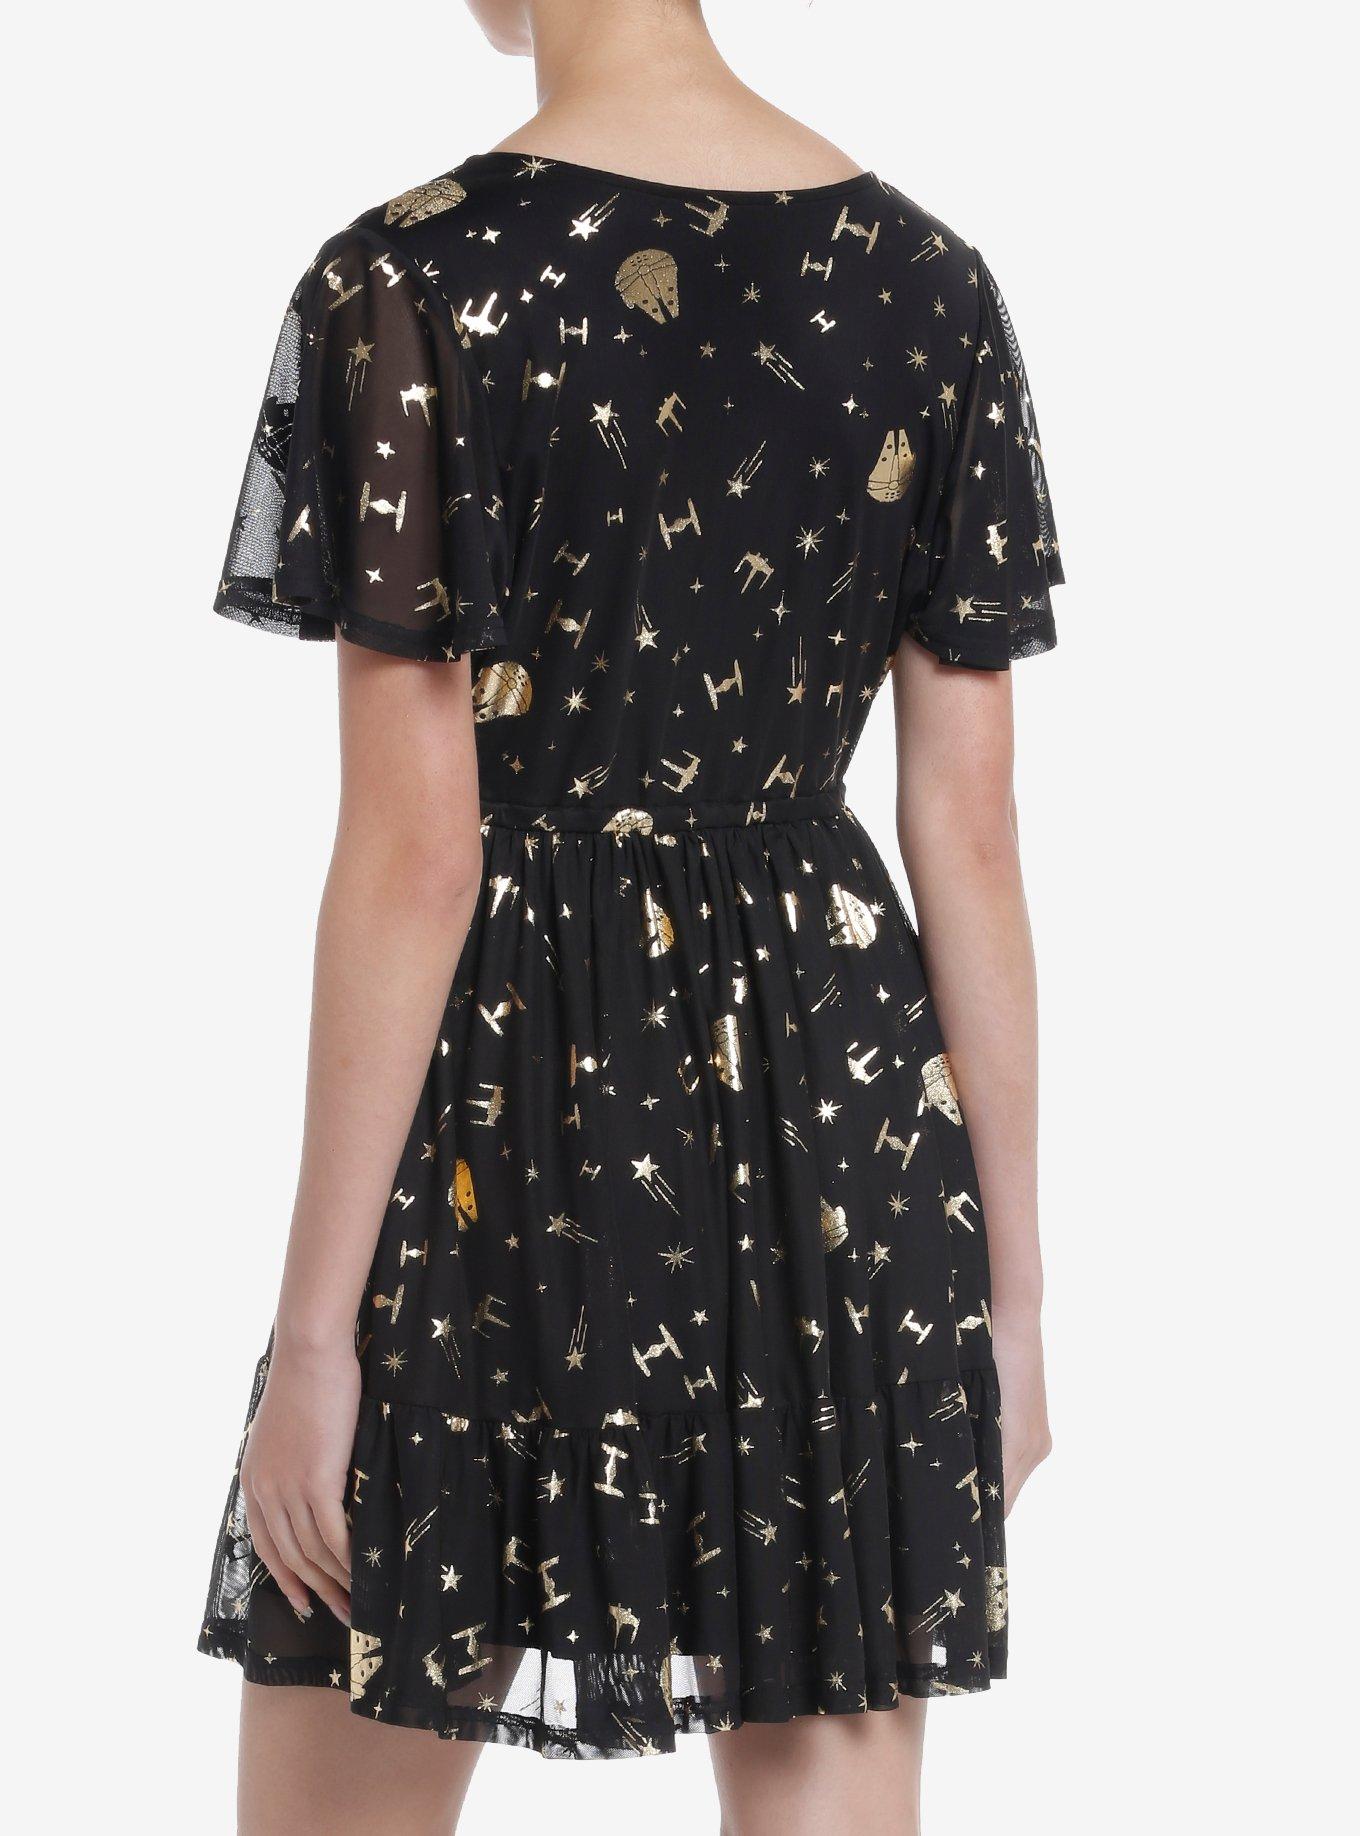 Star Wars Metallic Foil Flutter Dress, GOLD, alternate